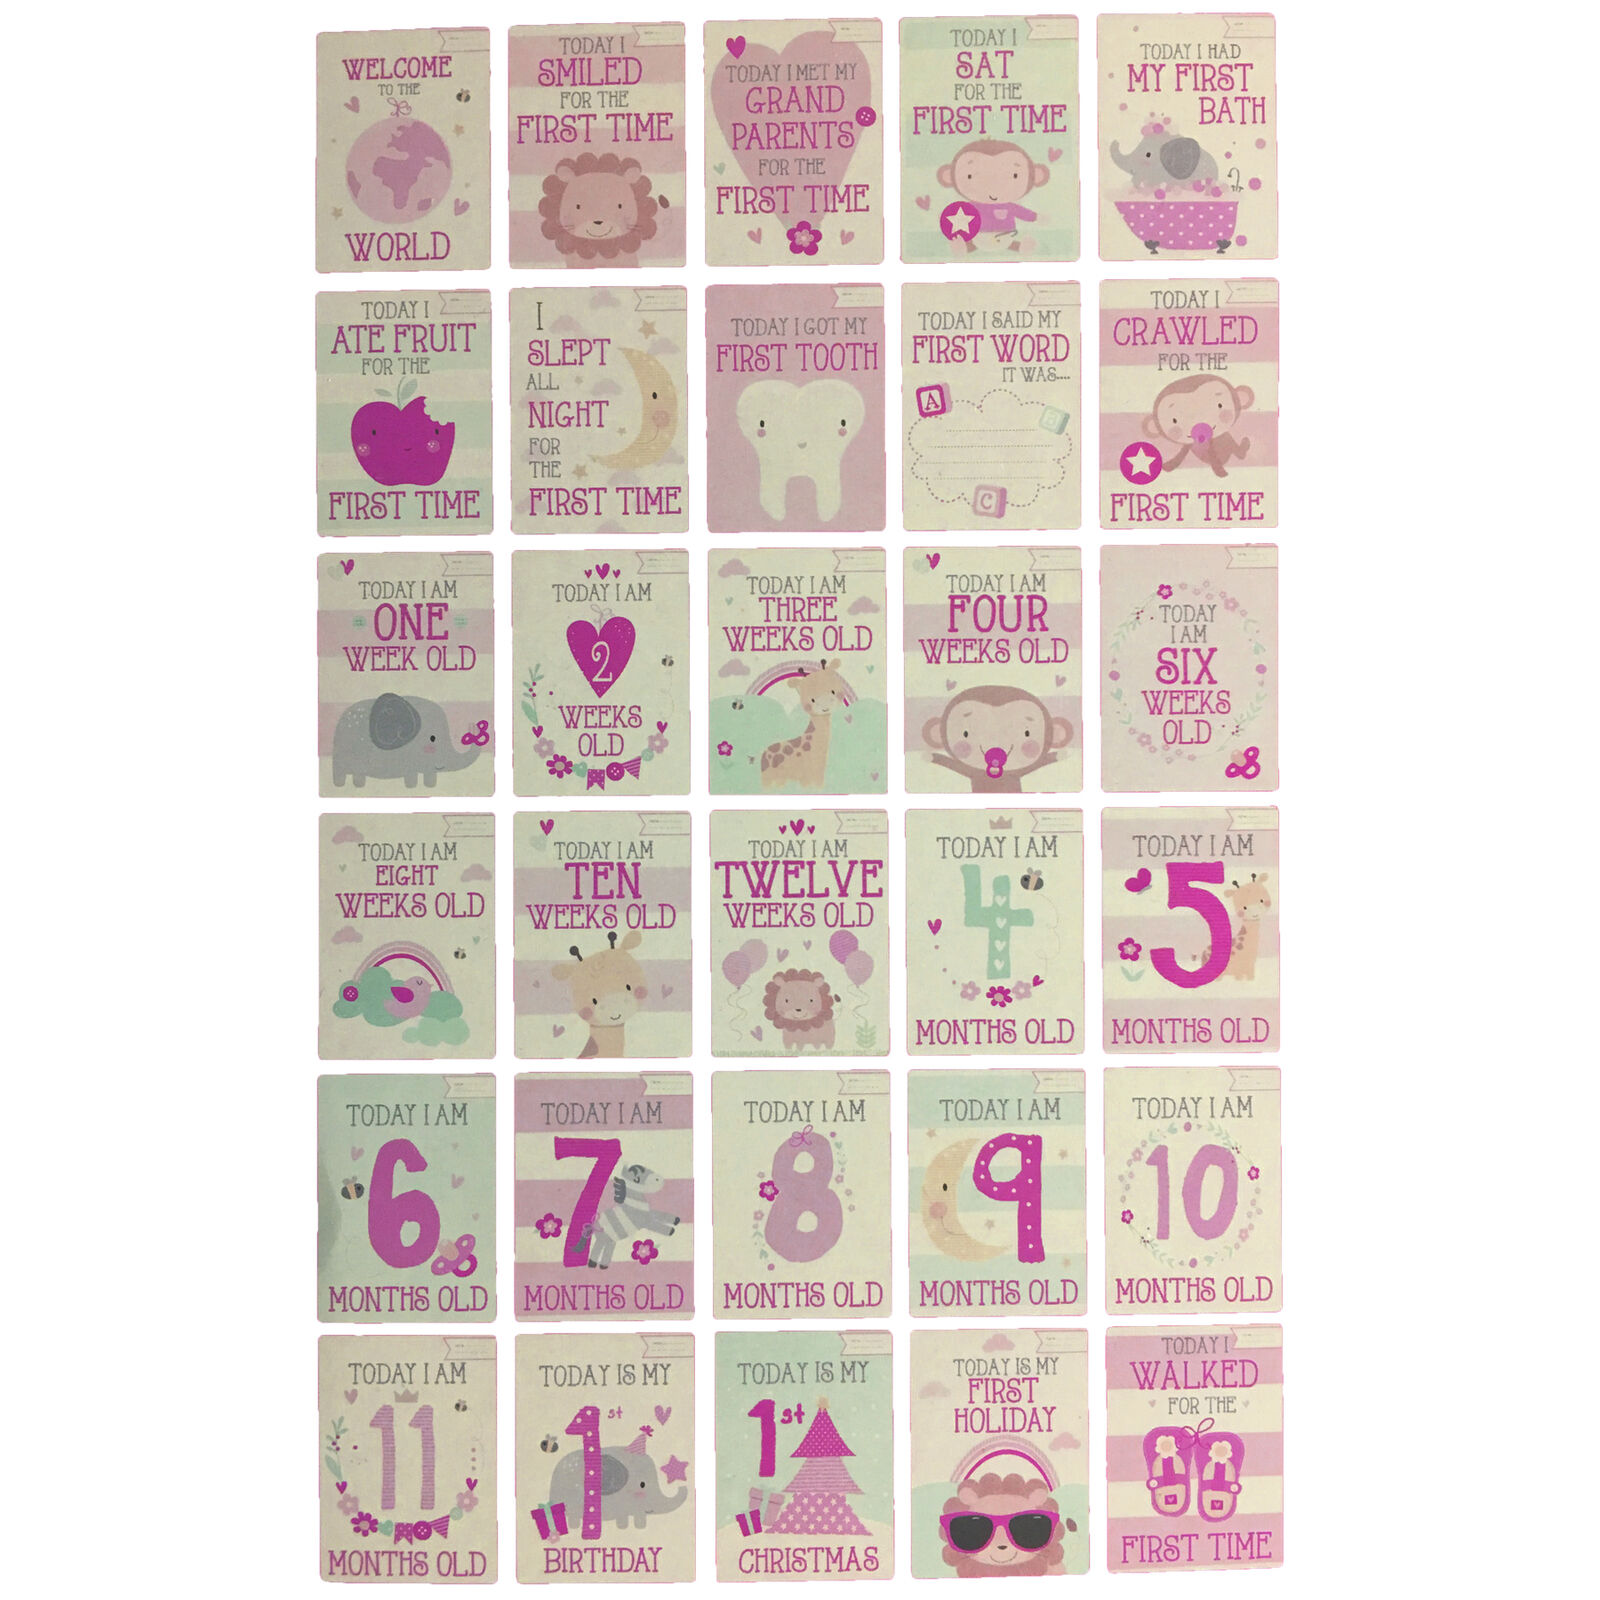 30 Memorable Moment Milestone Cards - Keepsake “Baby’s 1st Year” - GIRL